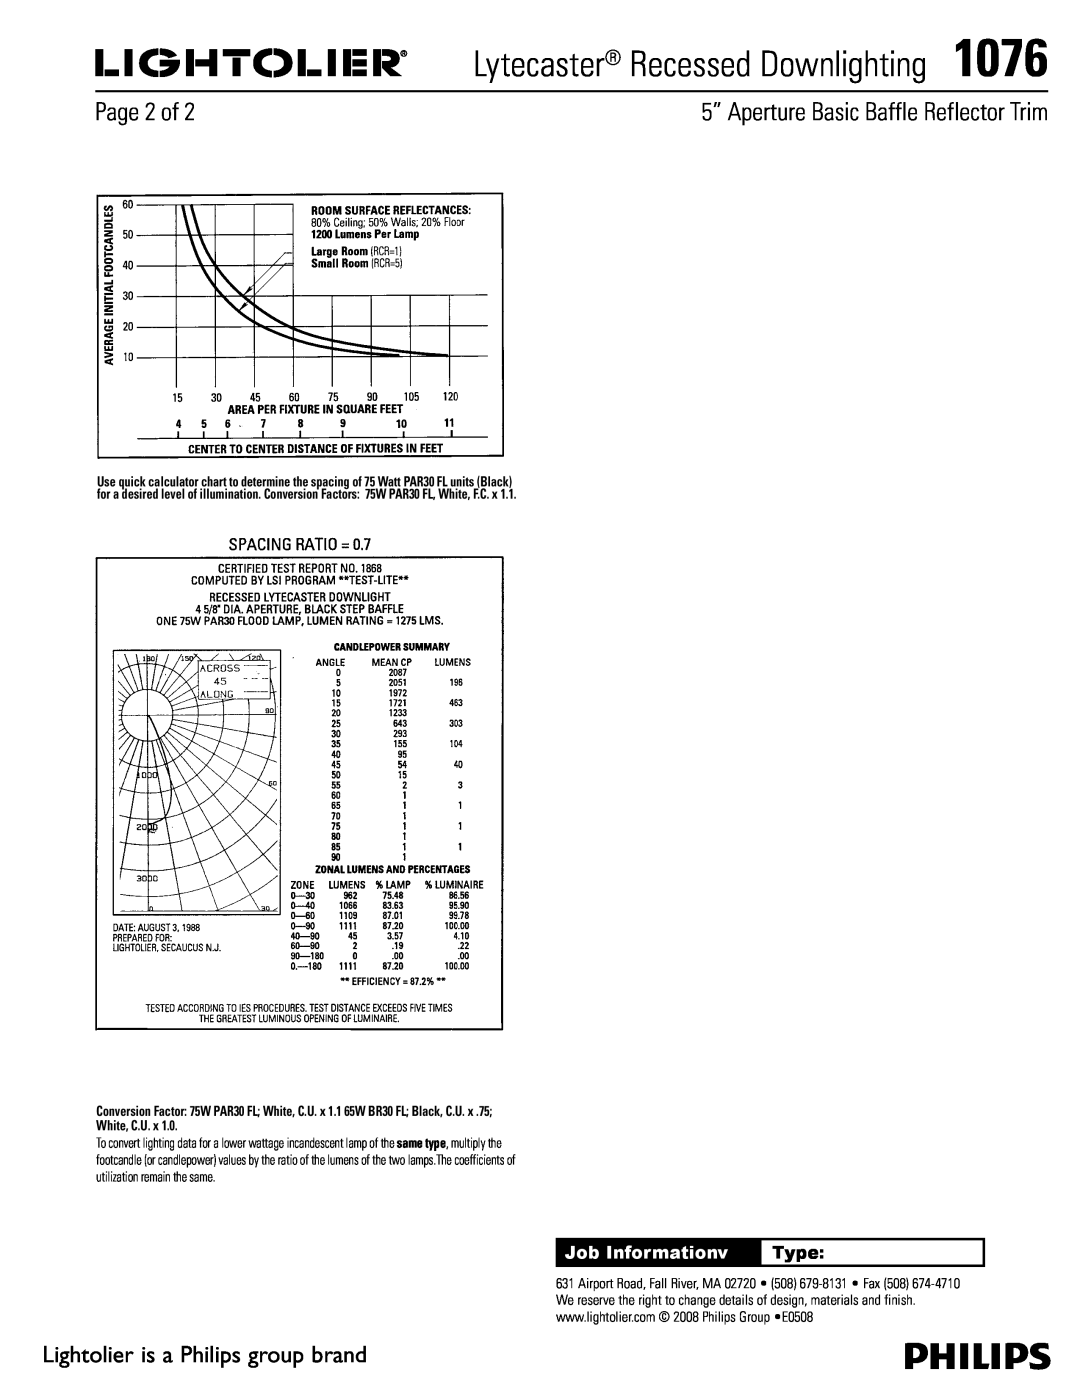 Lightolier Page 2 of, Job Informationv, Lytecaster Recessed Downlighting1076, 5” Aperture Basic Baffle Reflector Trim 